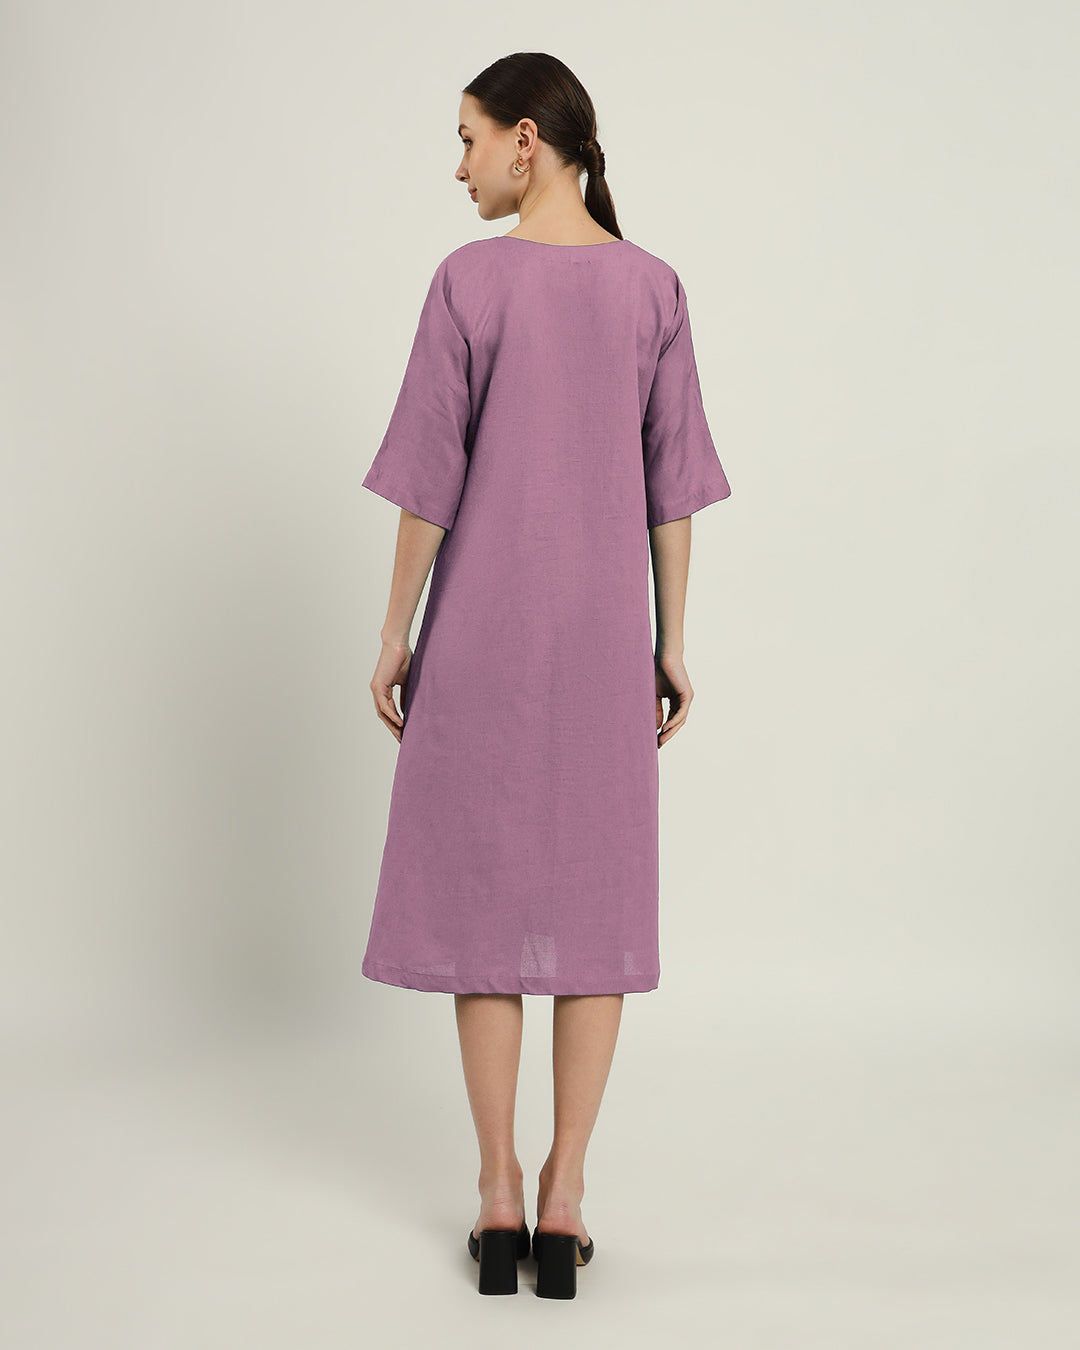 The Mildura Purple Swirl Dress